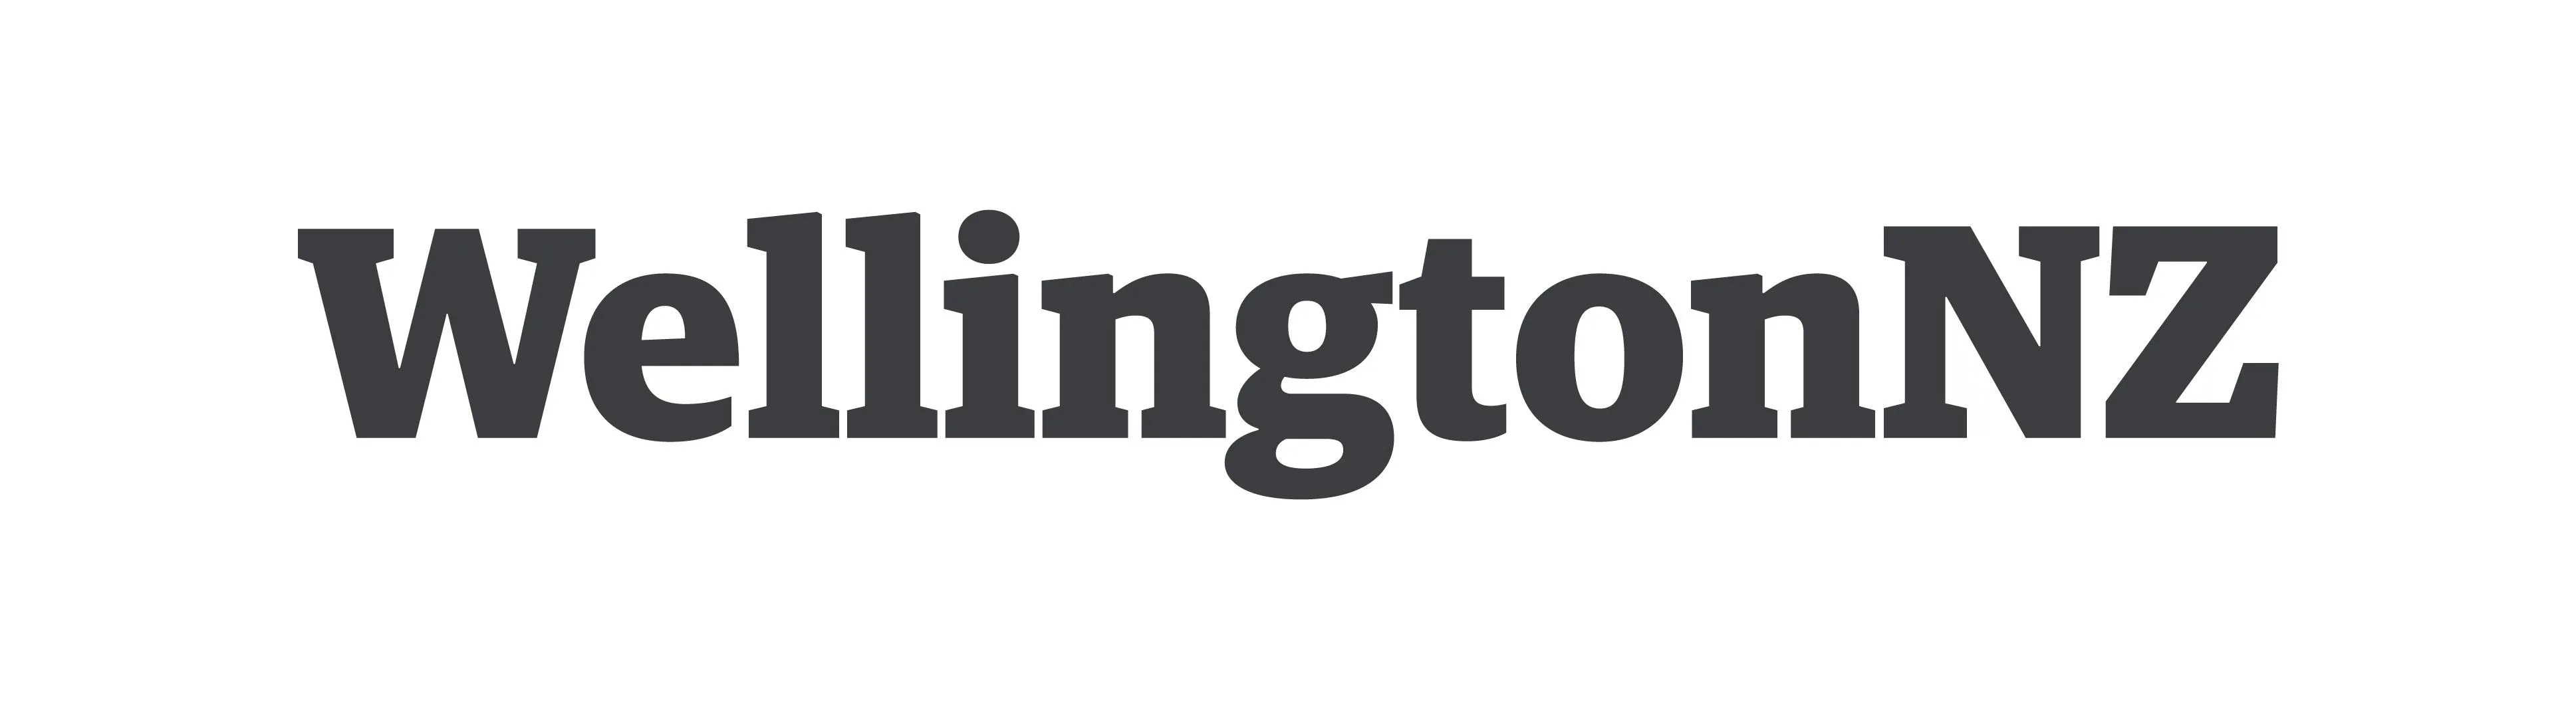 WellingtonNZ Logo